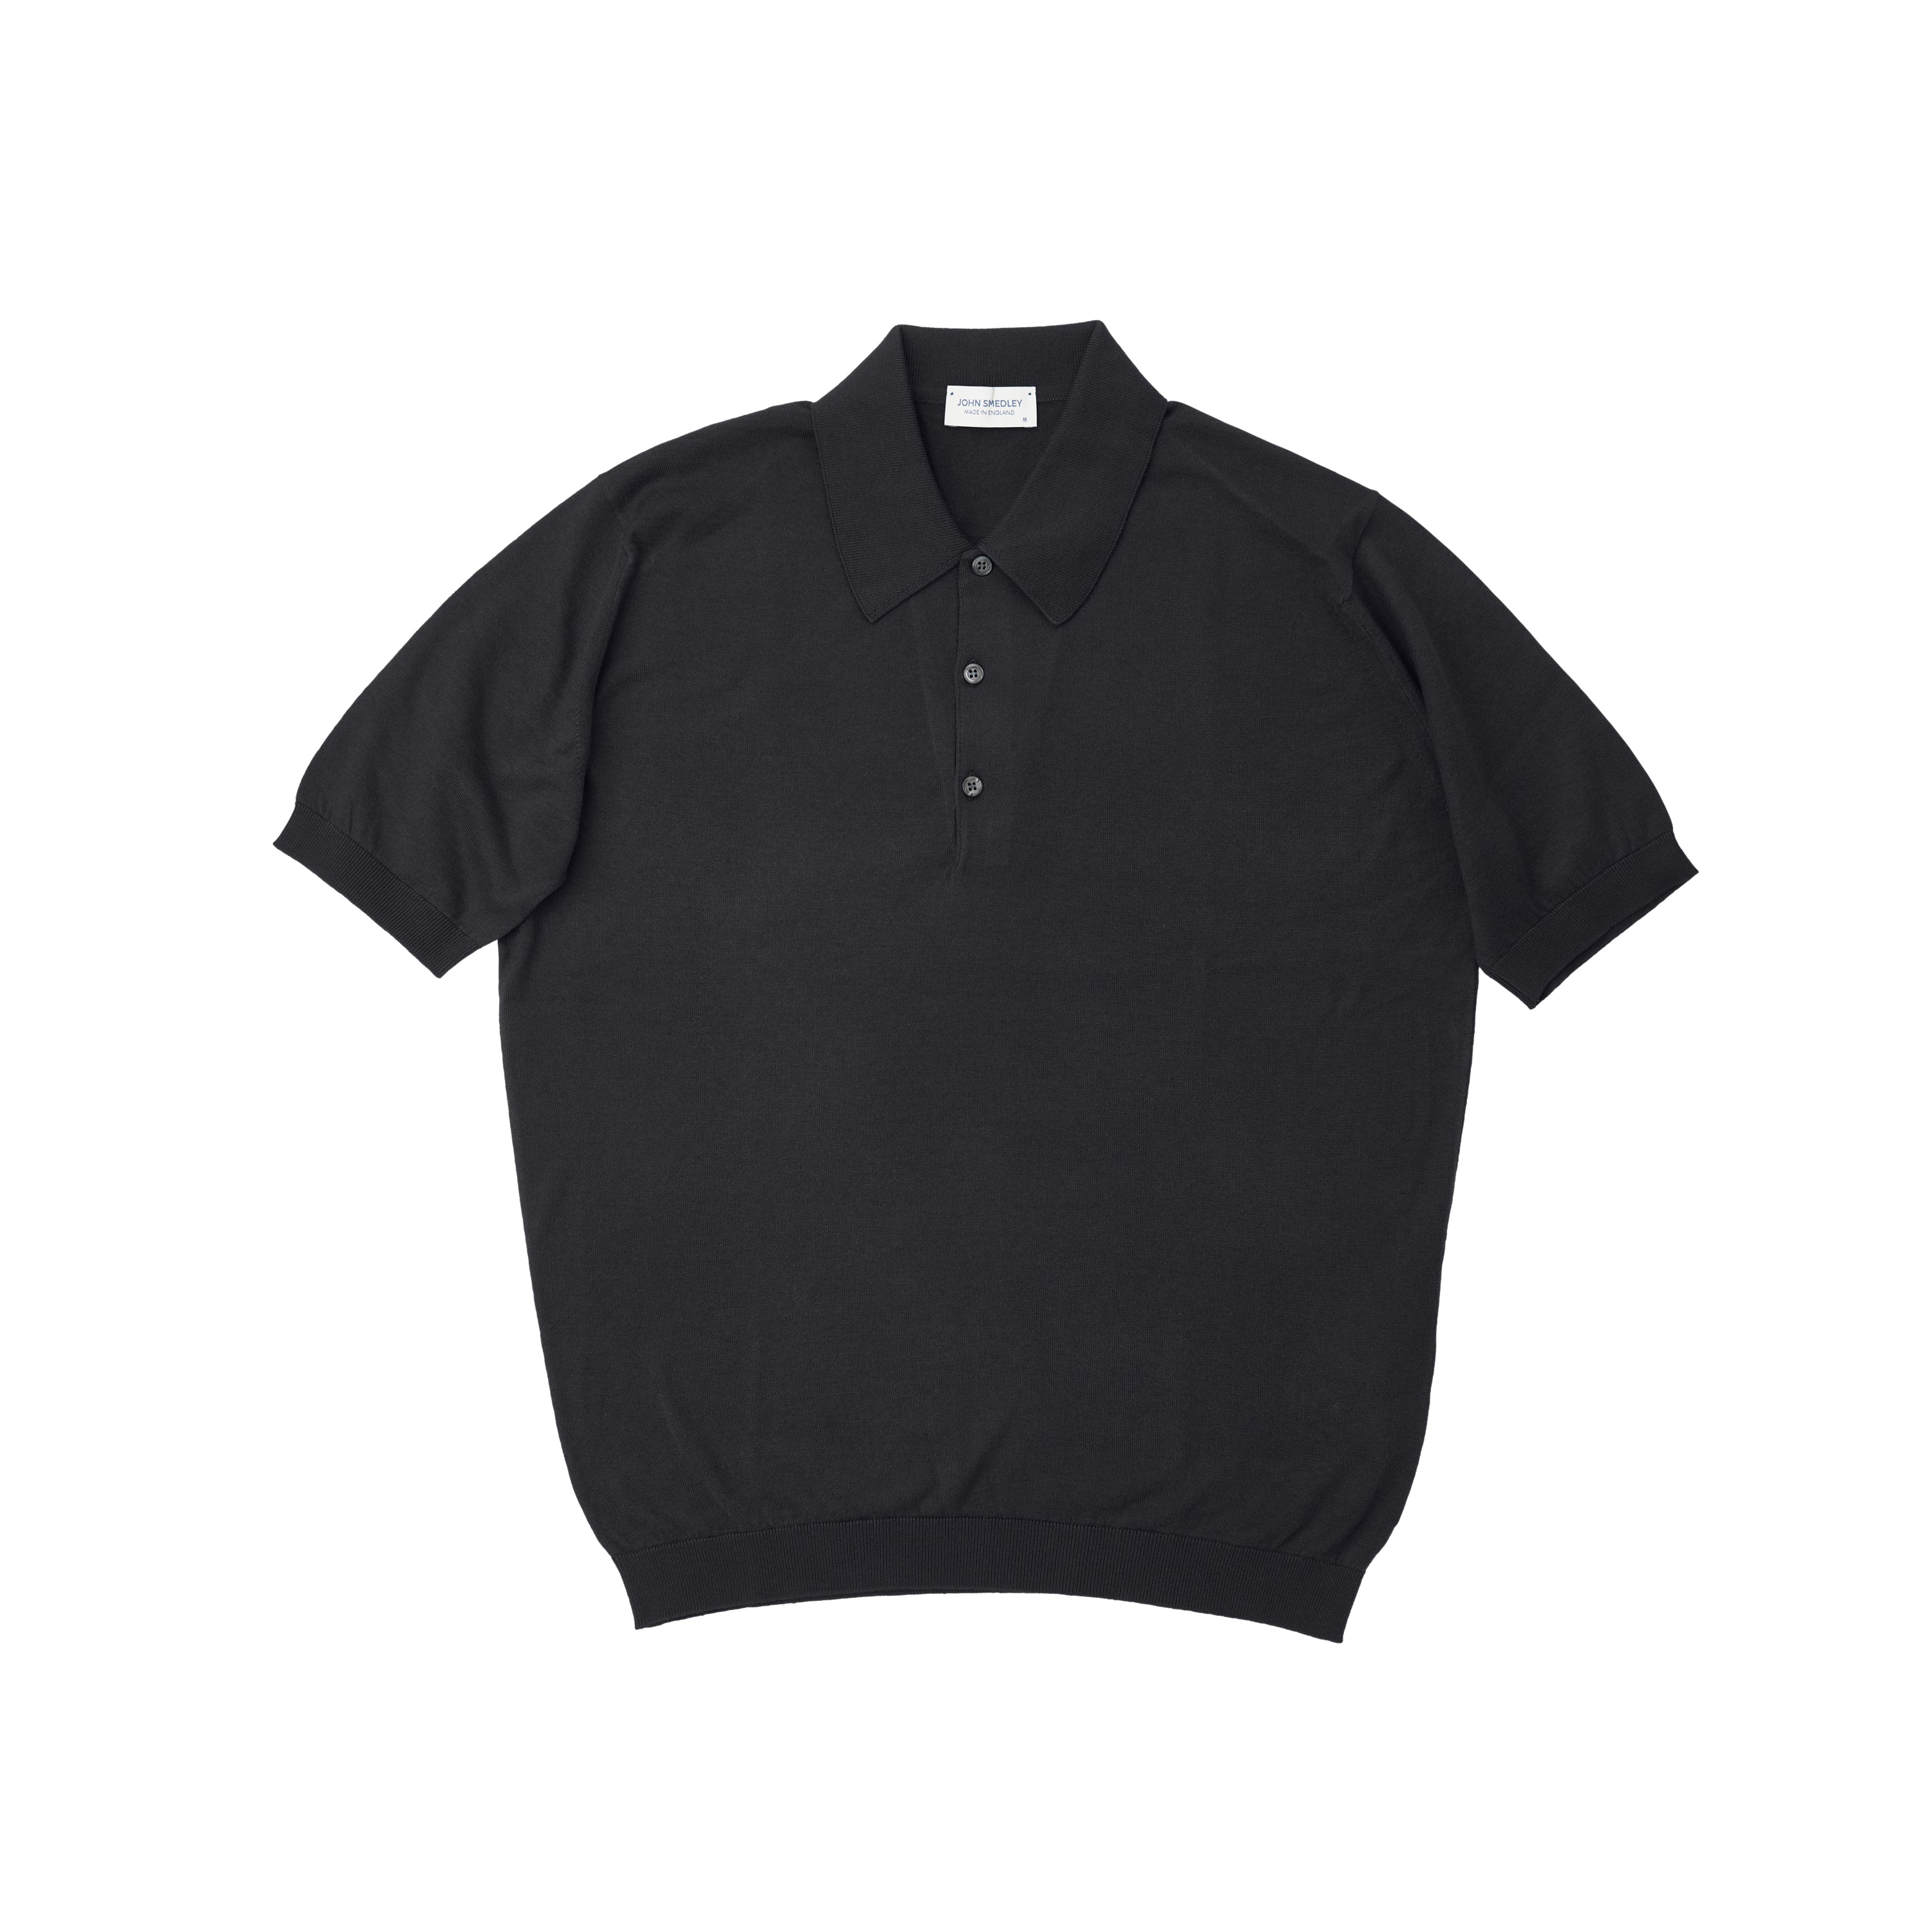 John Smedley Sea Island Cotton Black Polo Shirt